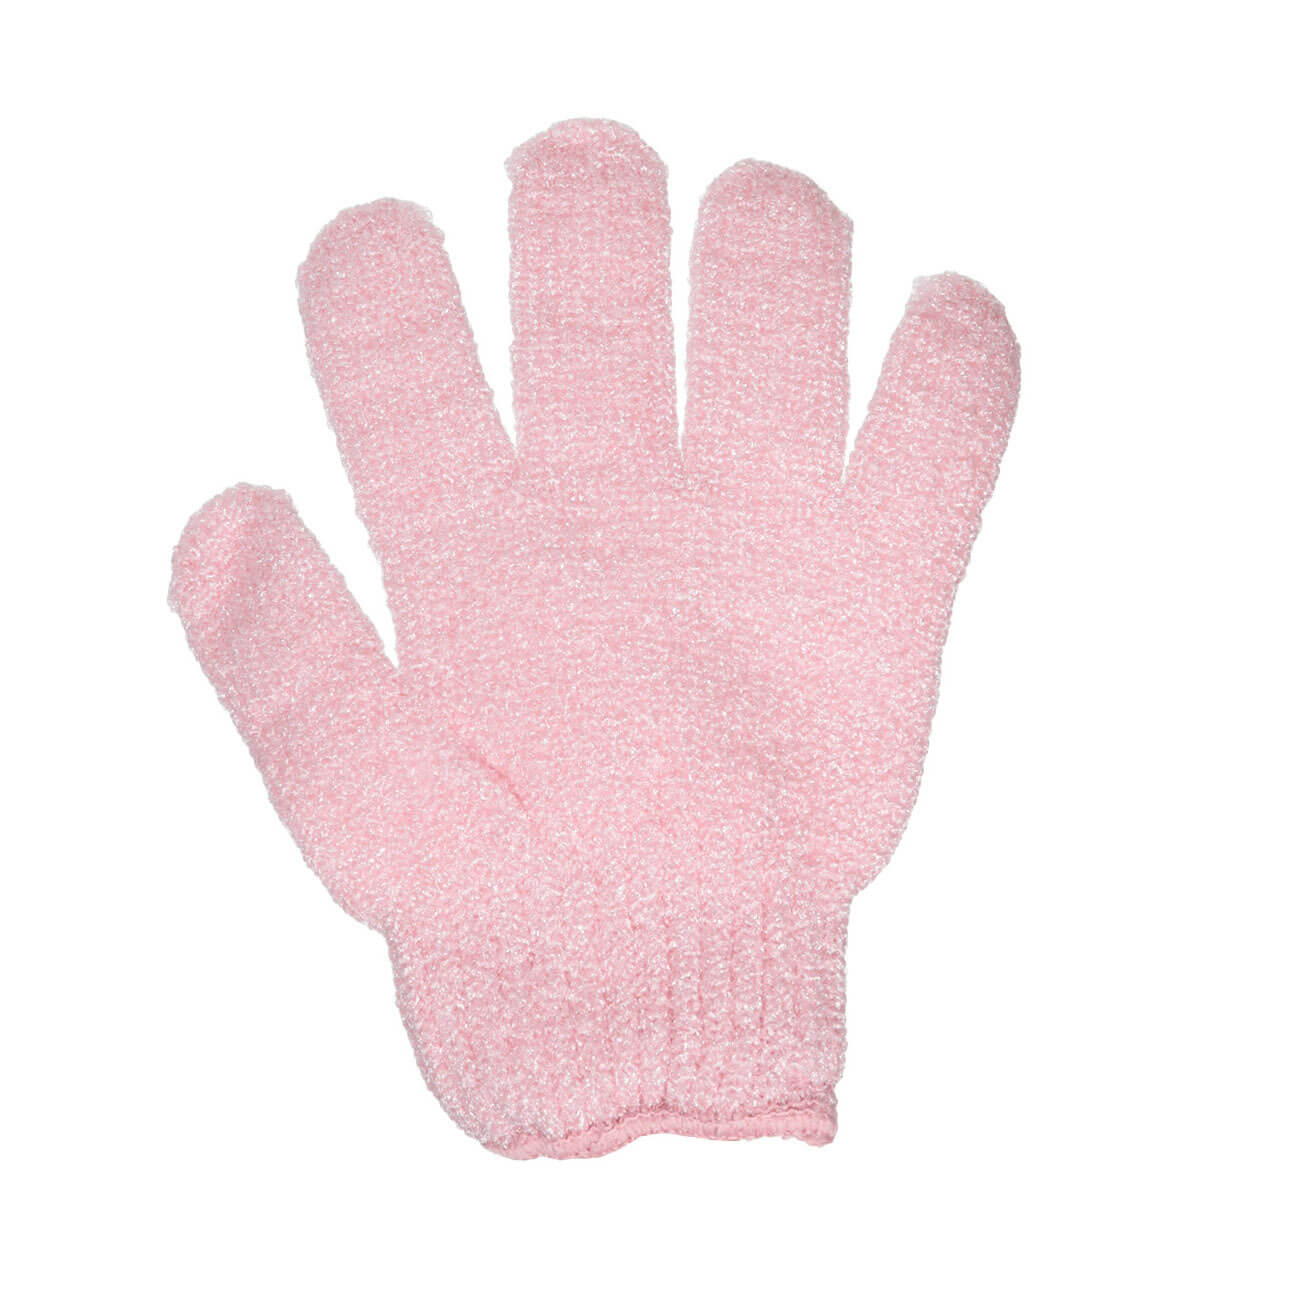 Перчатка для мытья тела, 19 см, 2 шт, нейлон, пудровая, Gentle spa перчатка титана